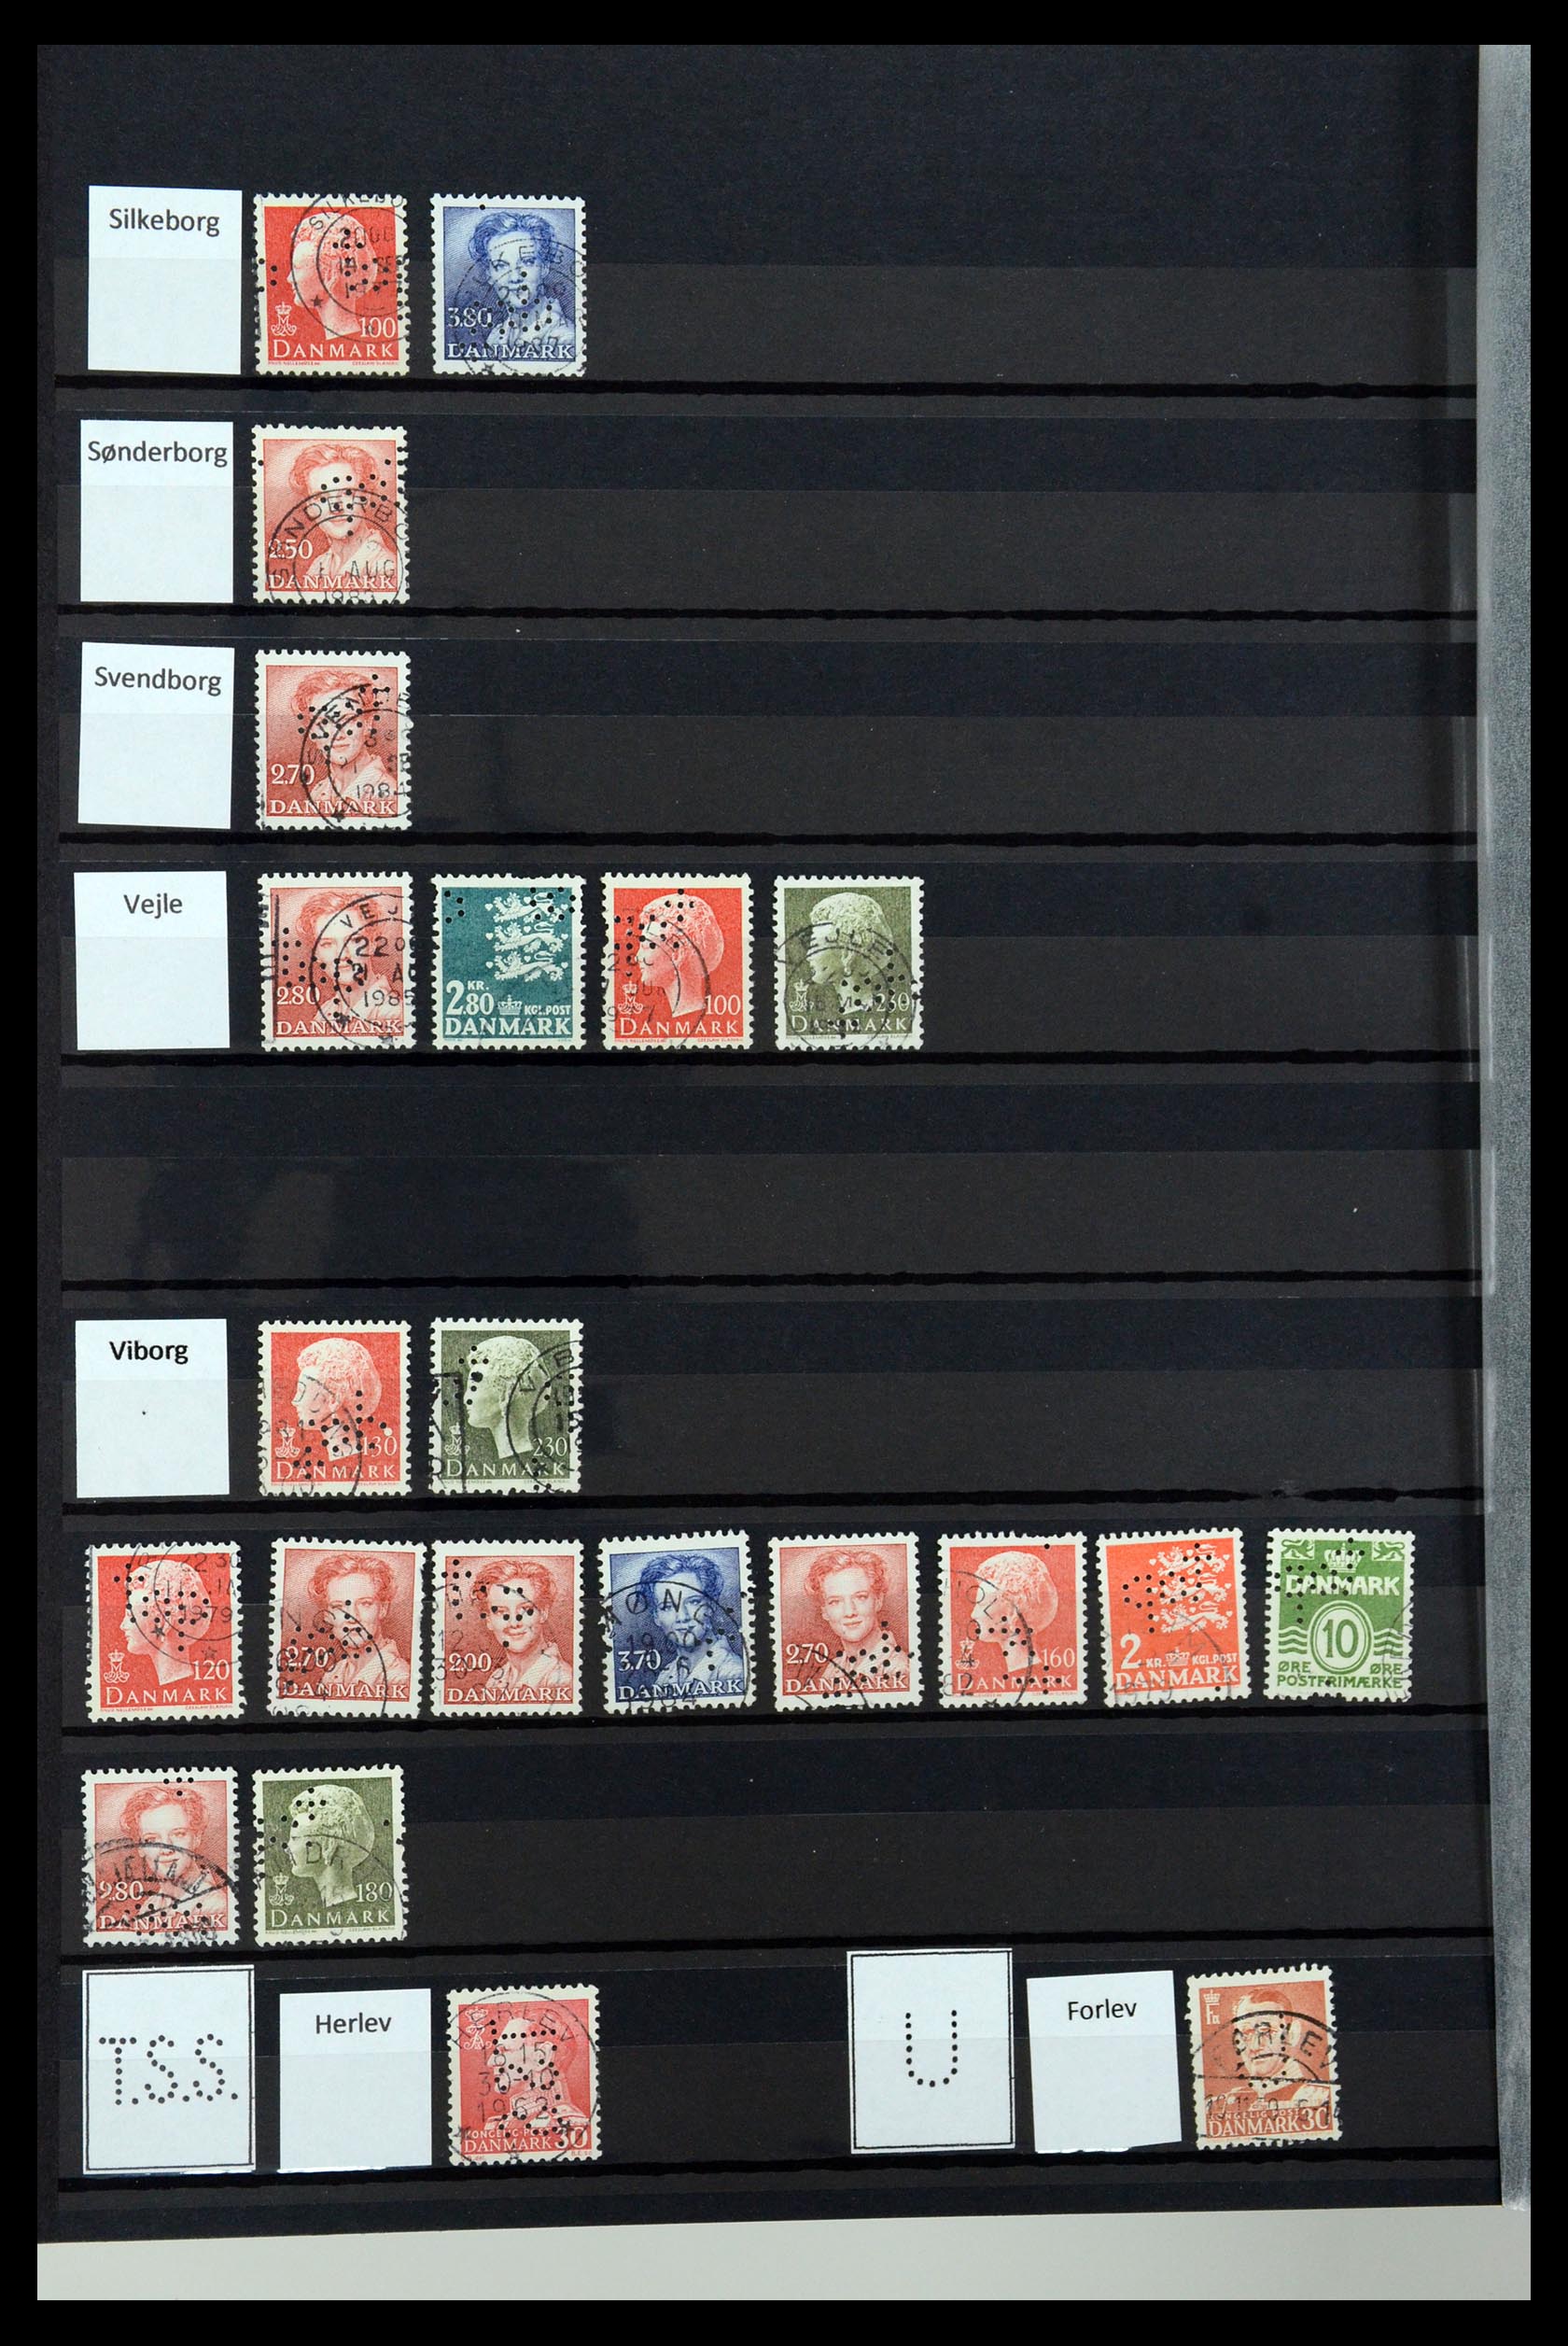 36396 109 - Stamp collection 36396 Denmark perfins.